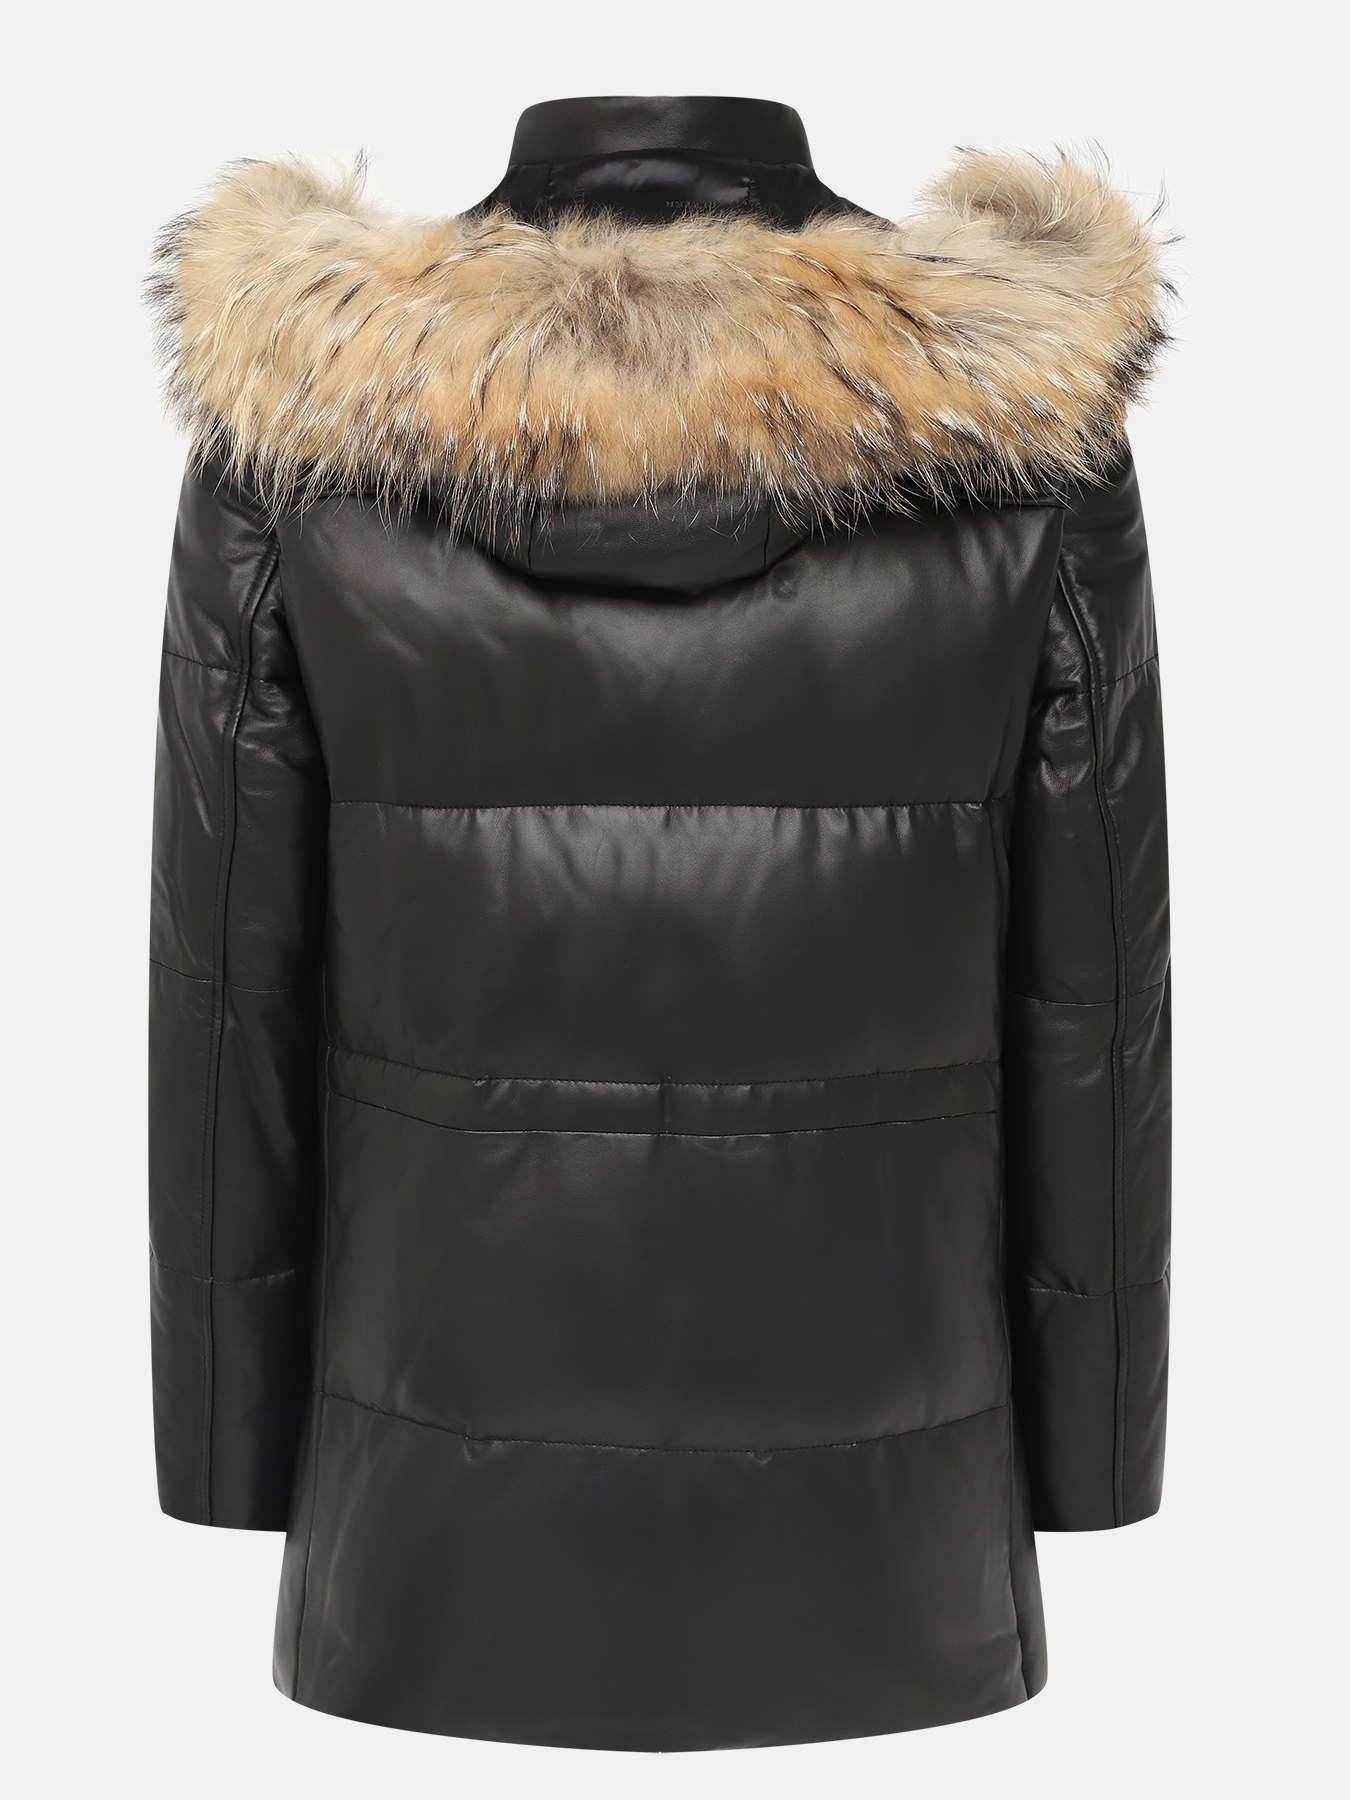 Кожаная куртка Ritter 390990-031, цвет черный, размер 60 - фото 4